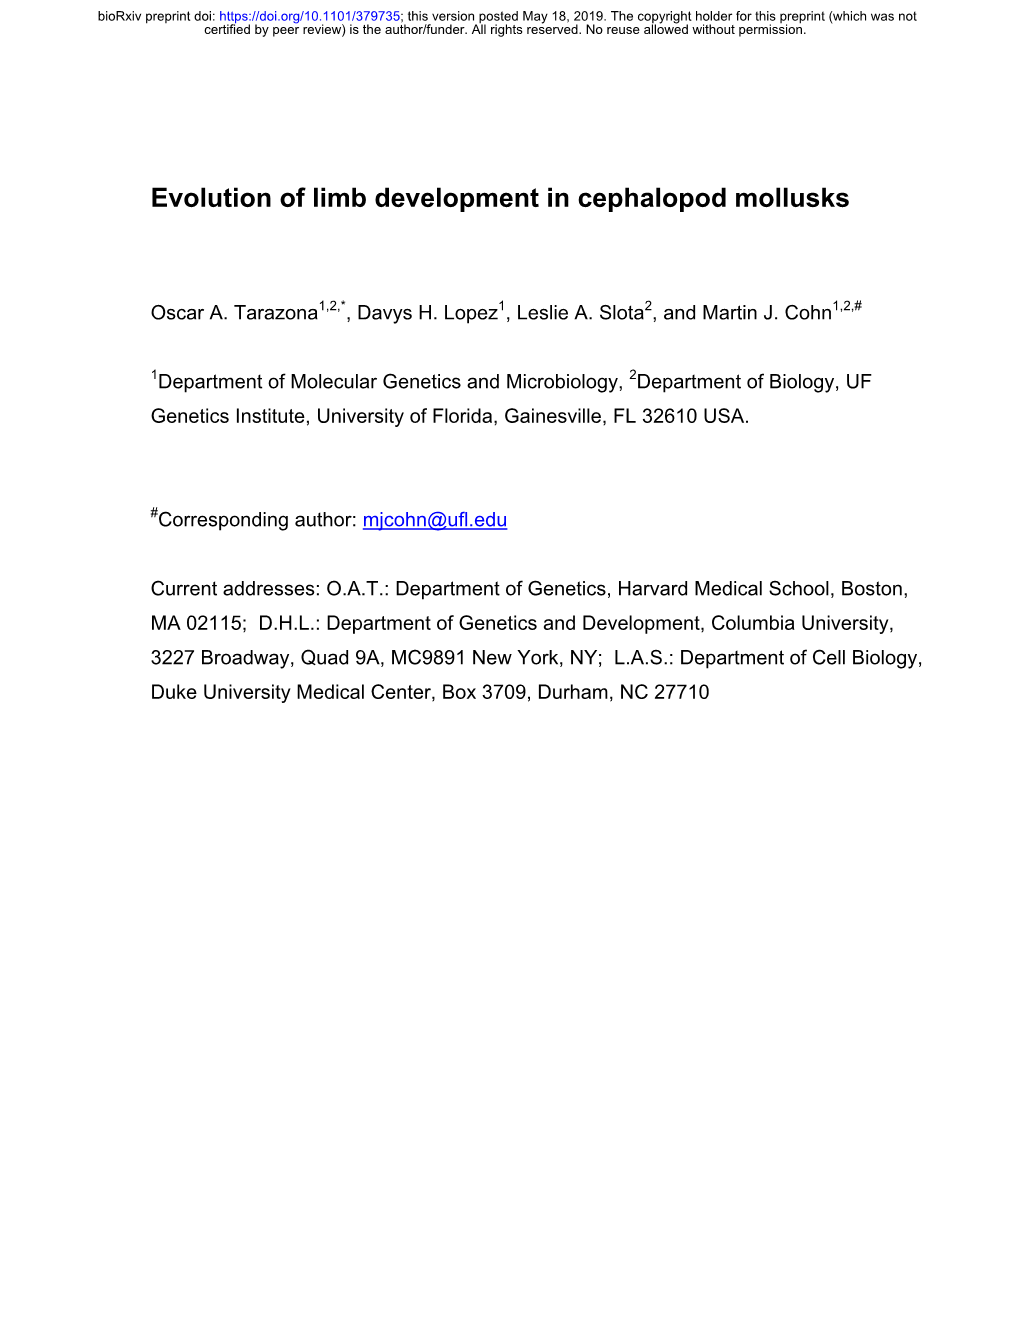 Evolution of Limb Development in Cephalopod Mollusks